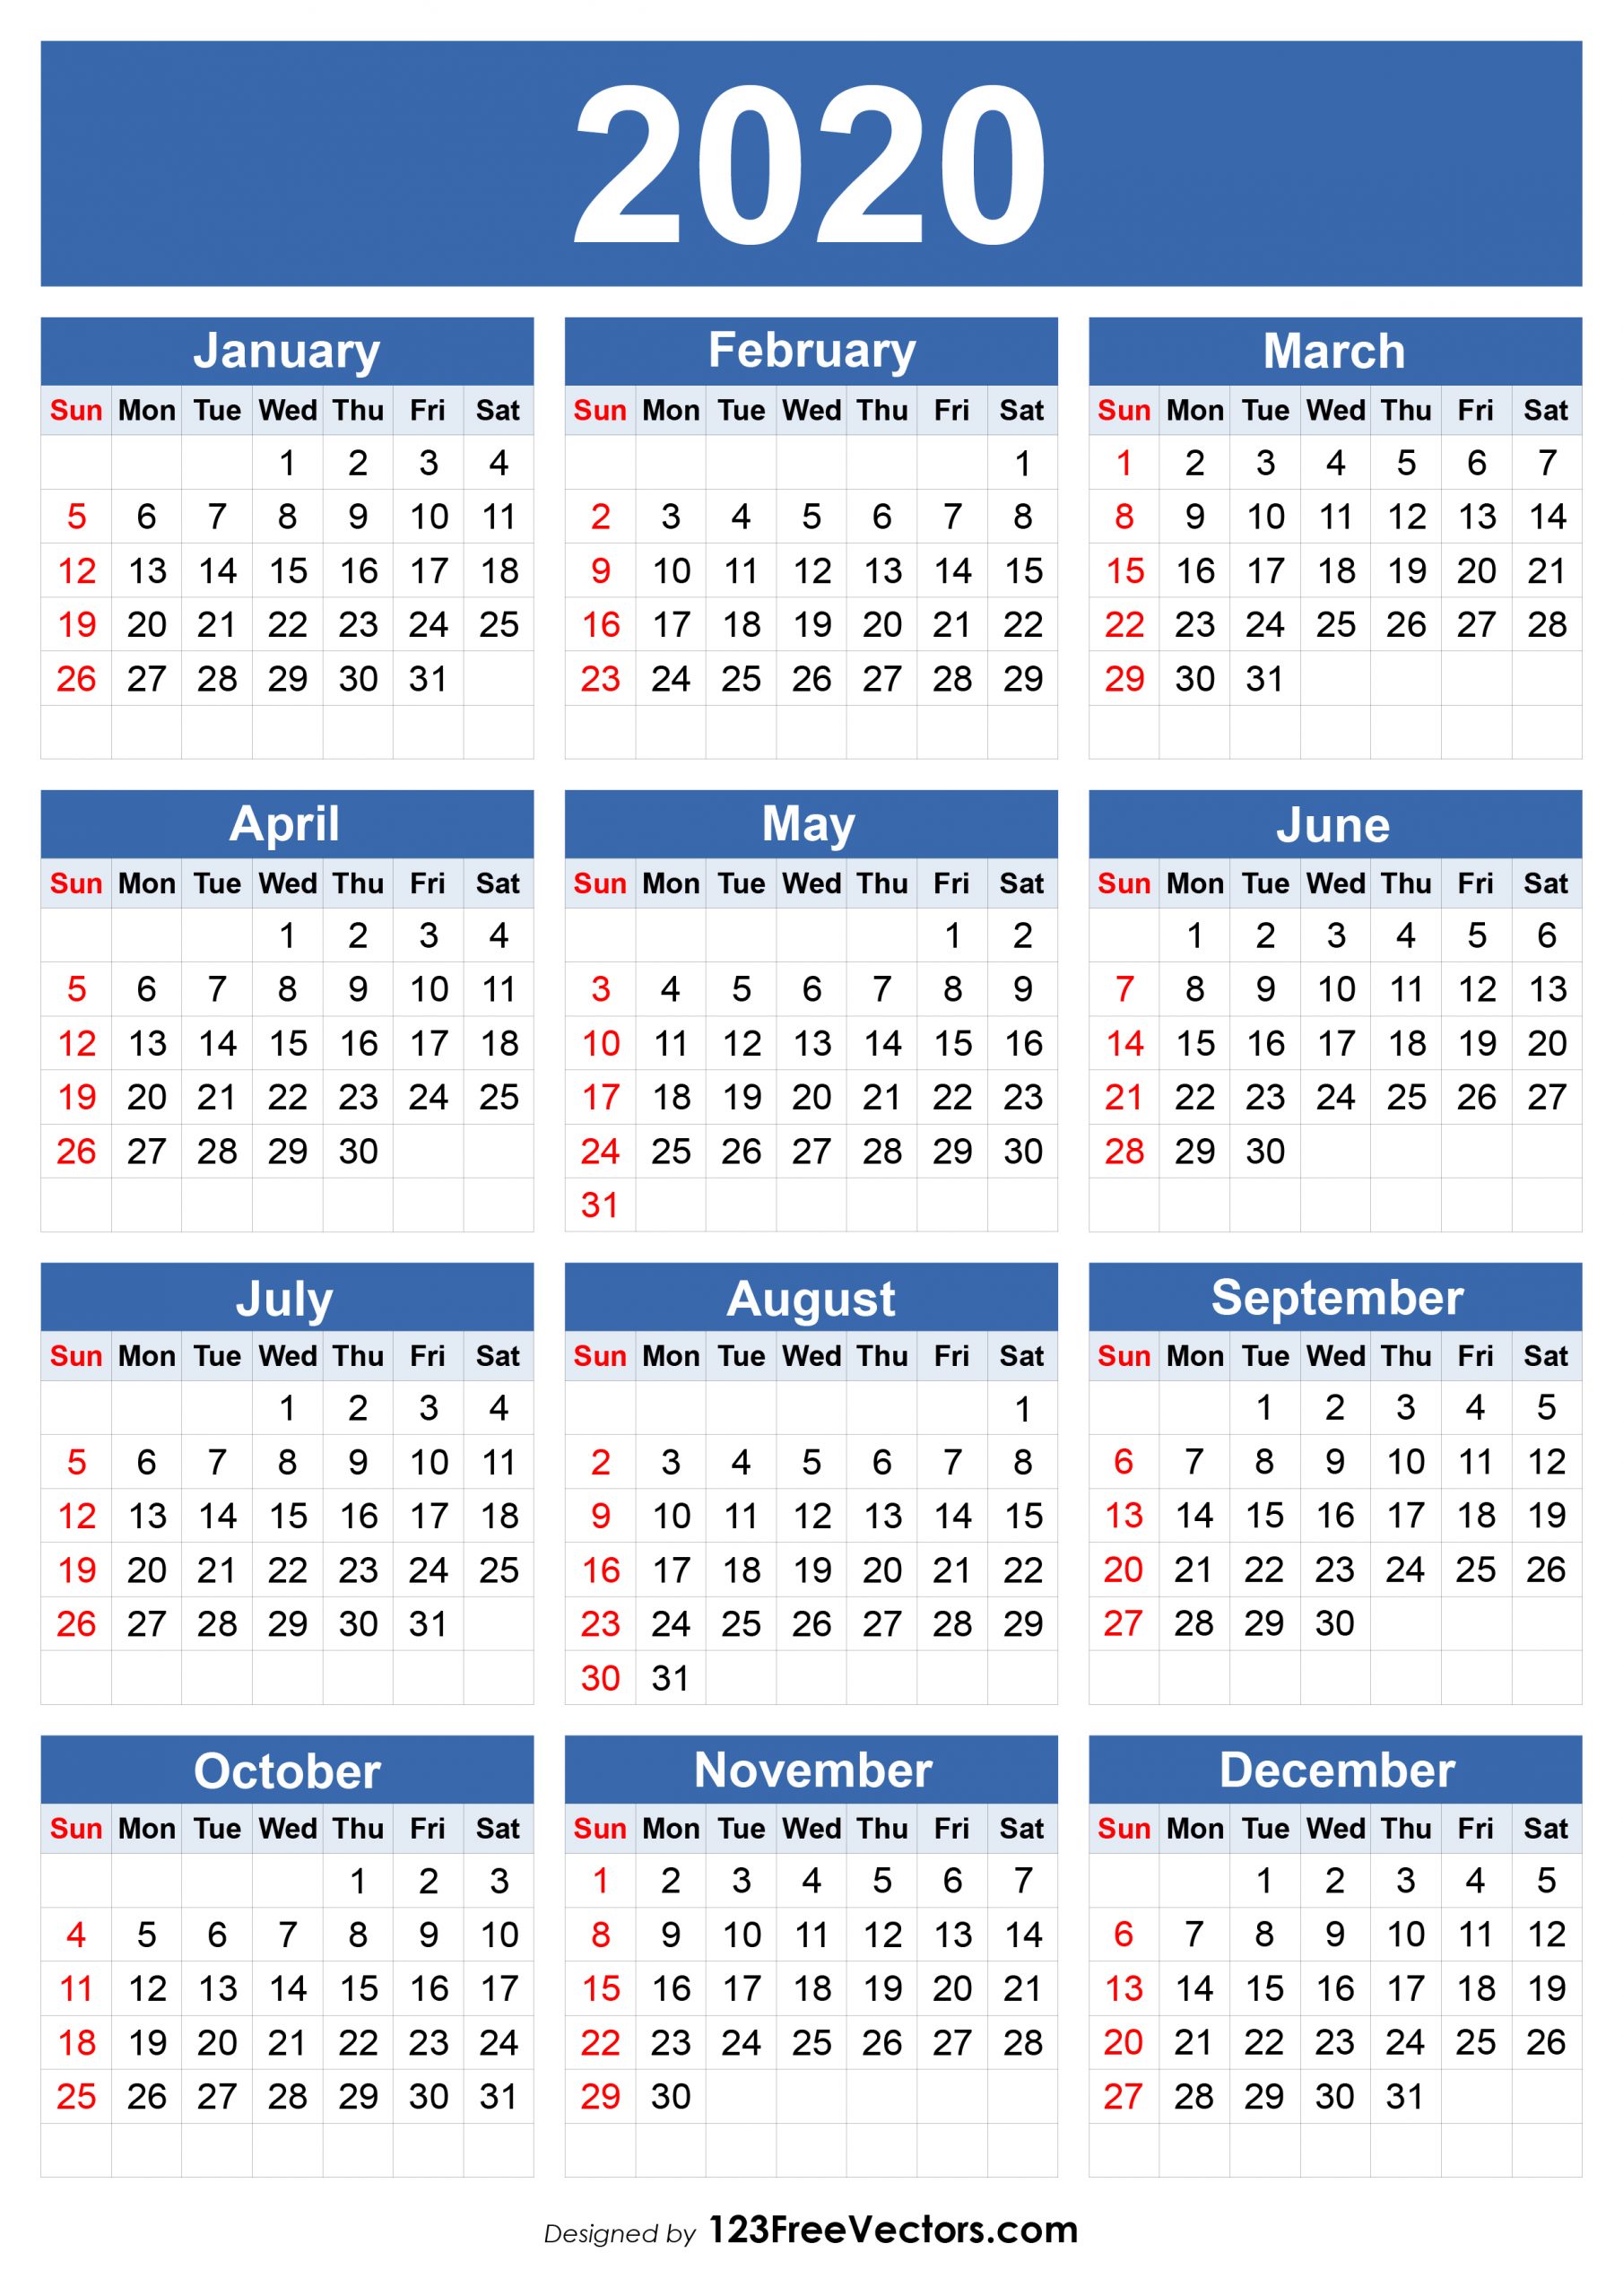 2020 calendar printable free indesign calendar template Calendar